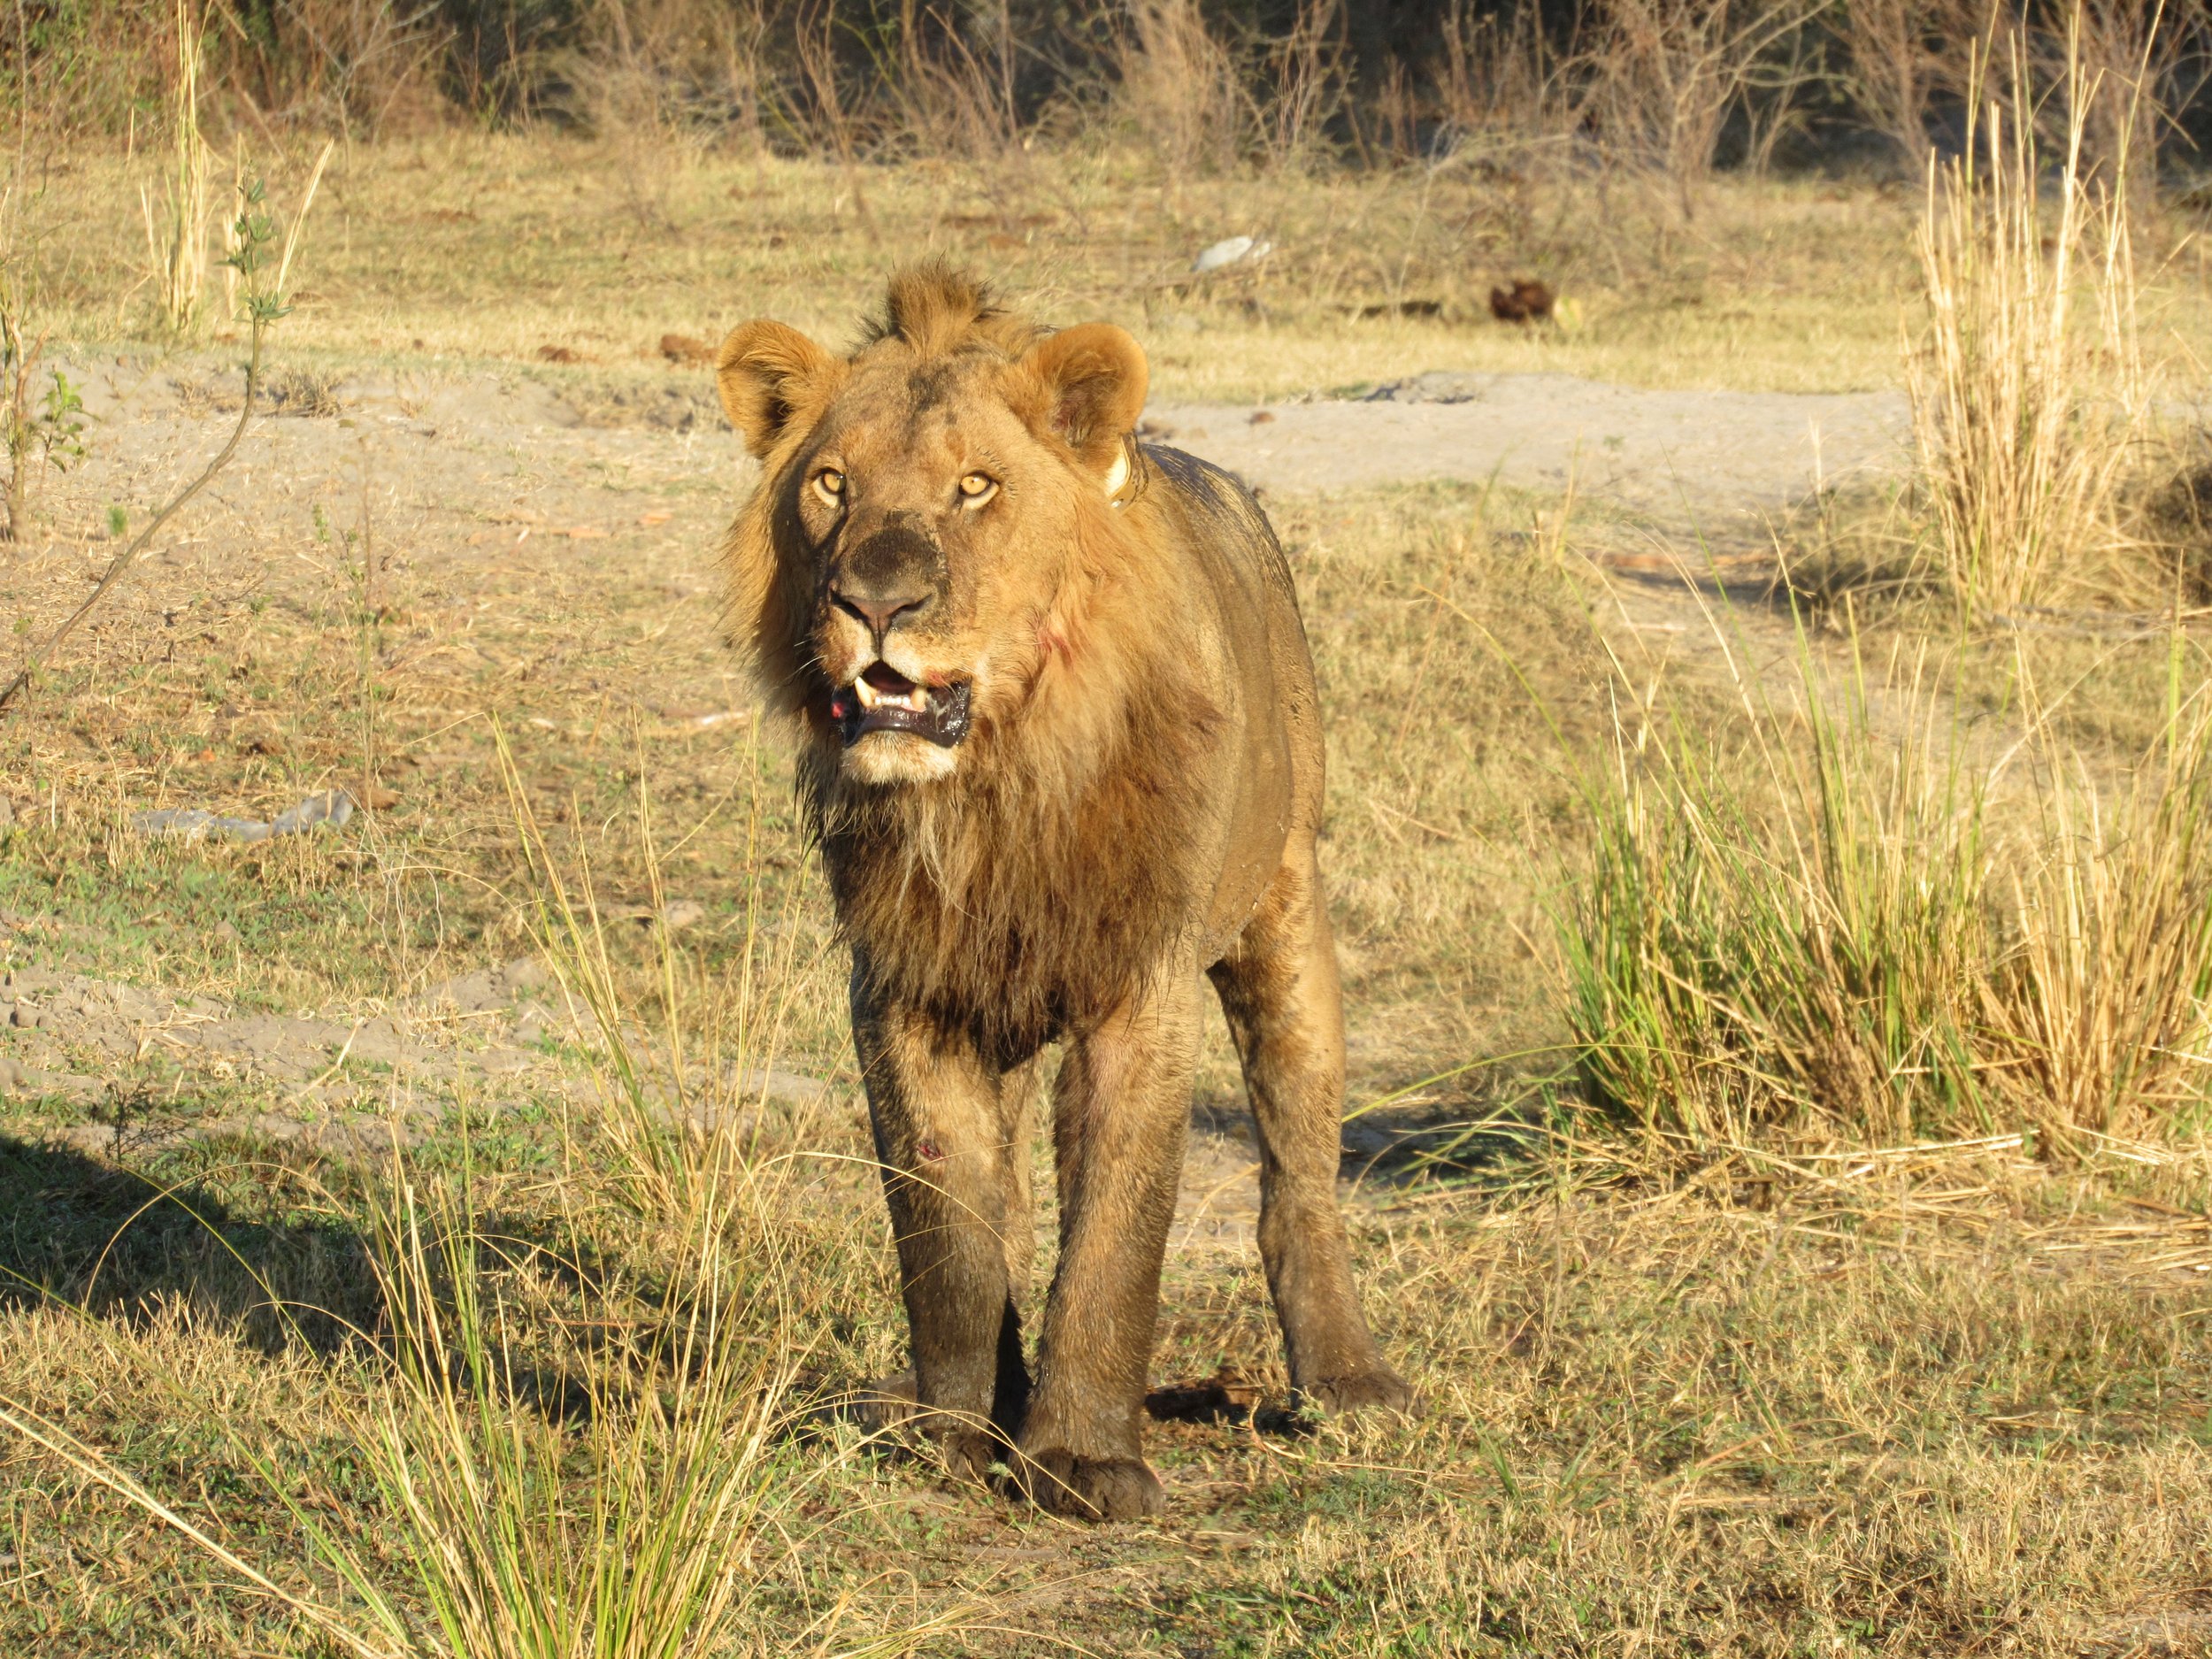 Algorithm discovers that every lion has a unique and trackable roar